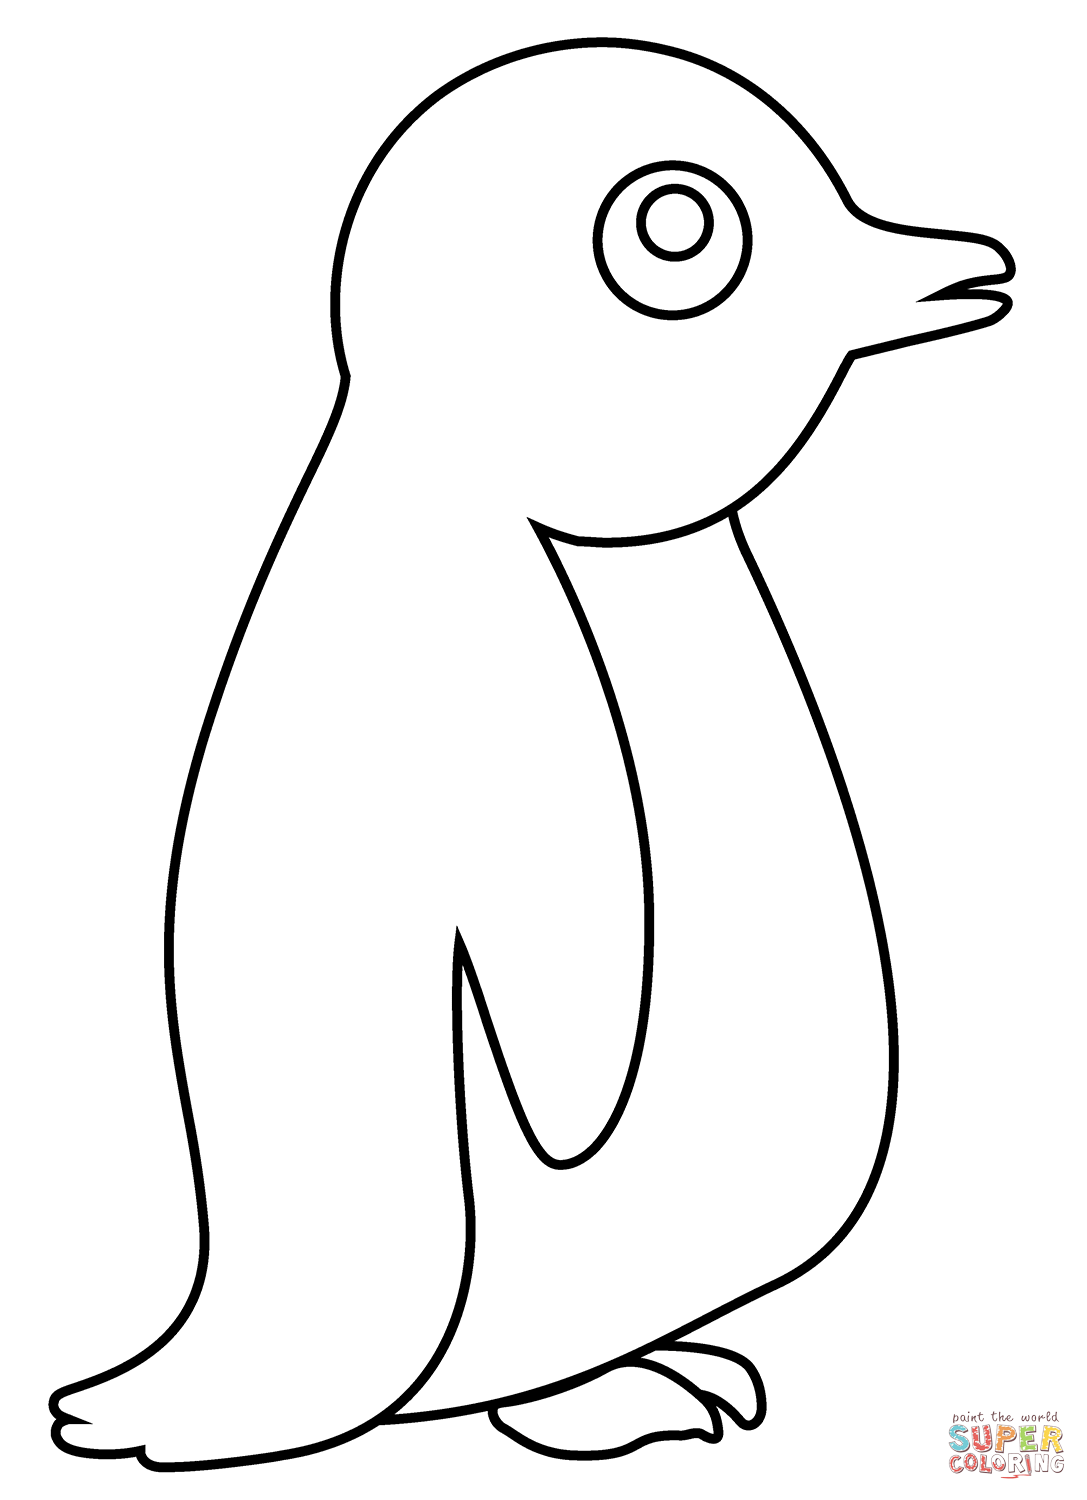 Dibujo de pingüino emoji para colorear | Dibujos para colorear imprimir  gratis